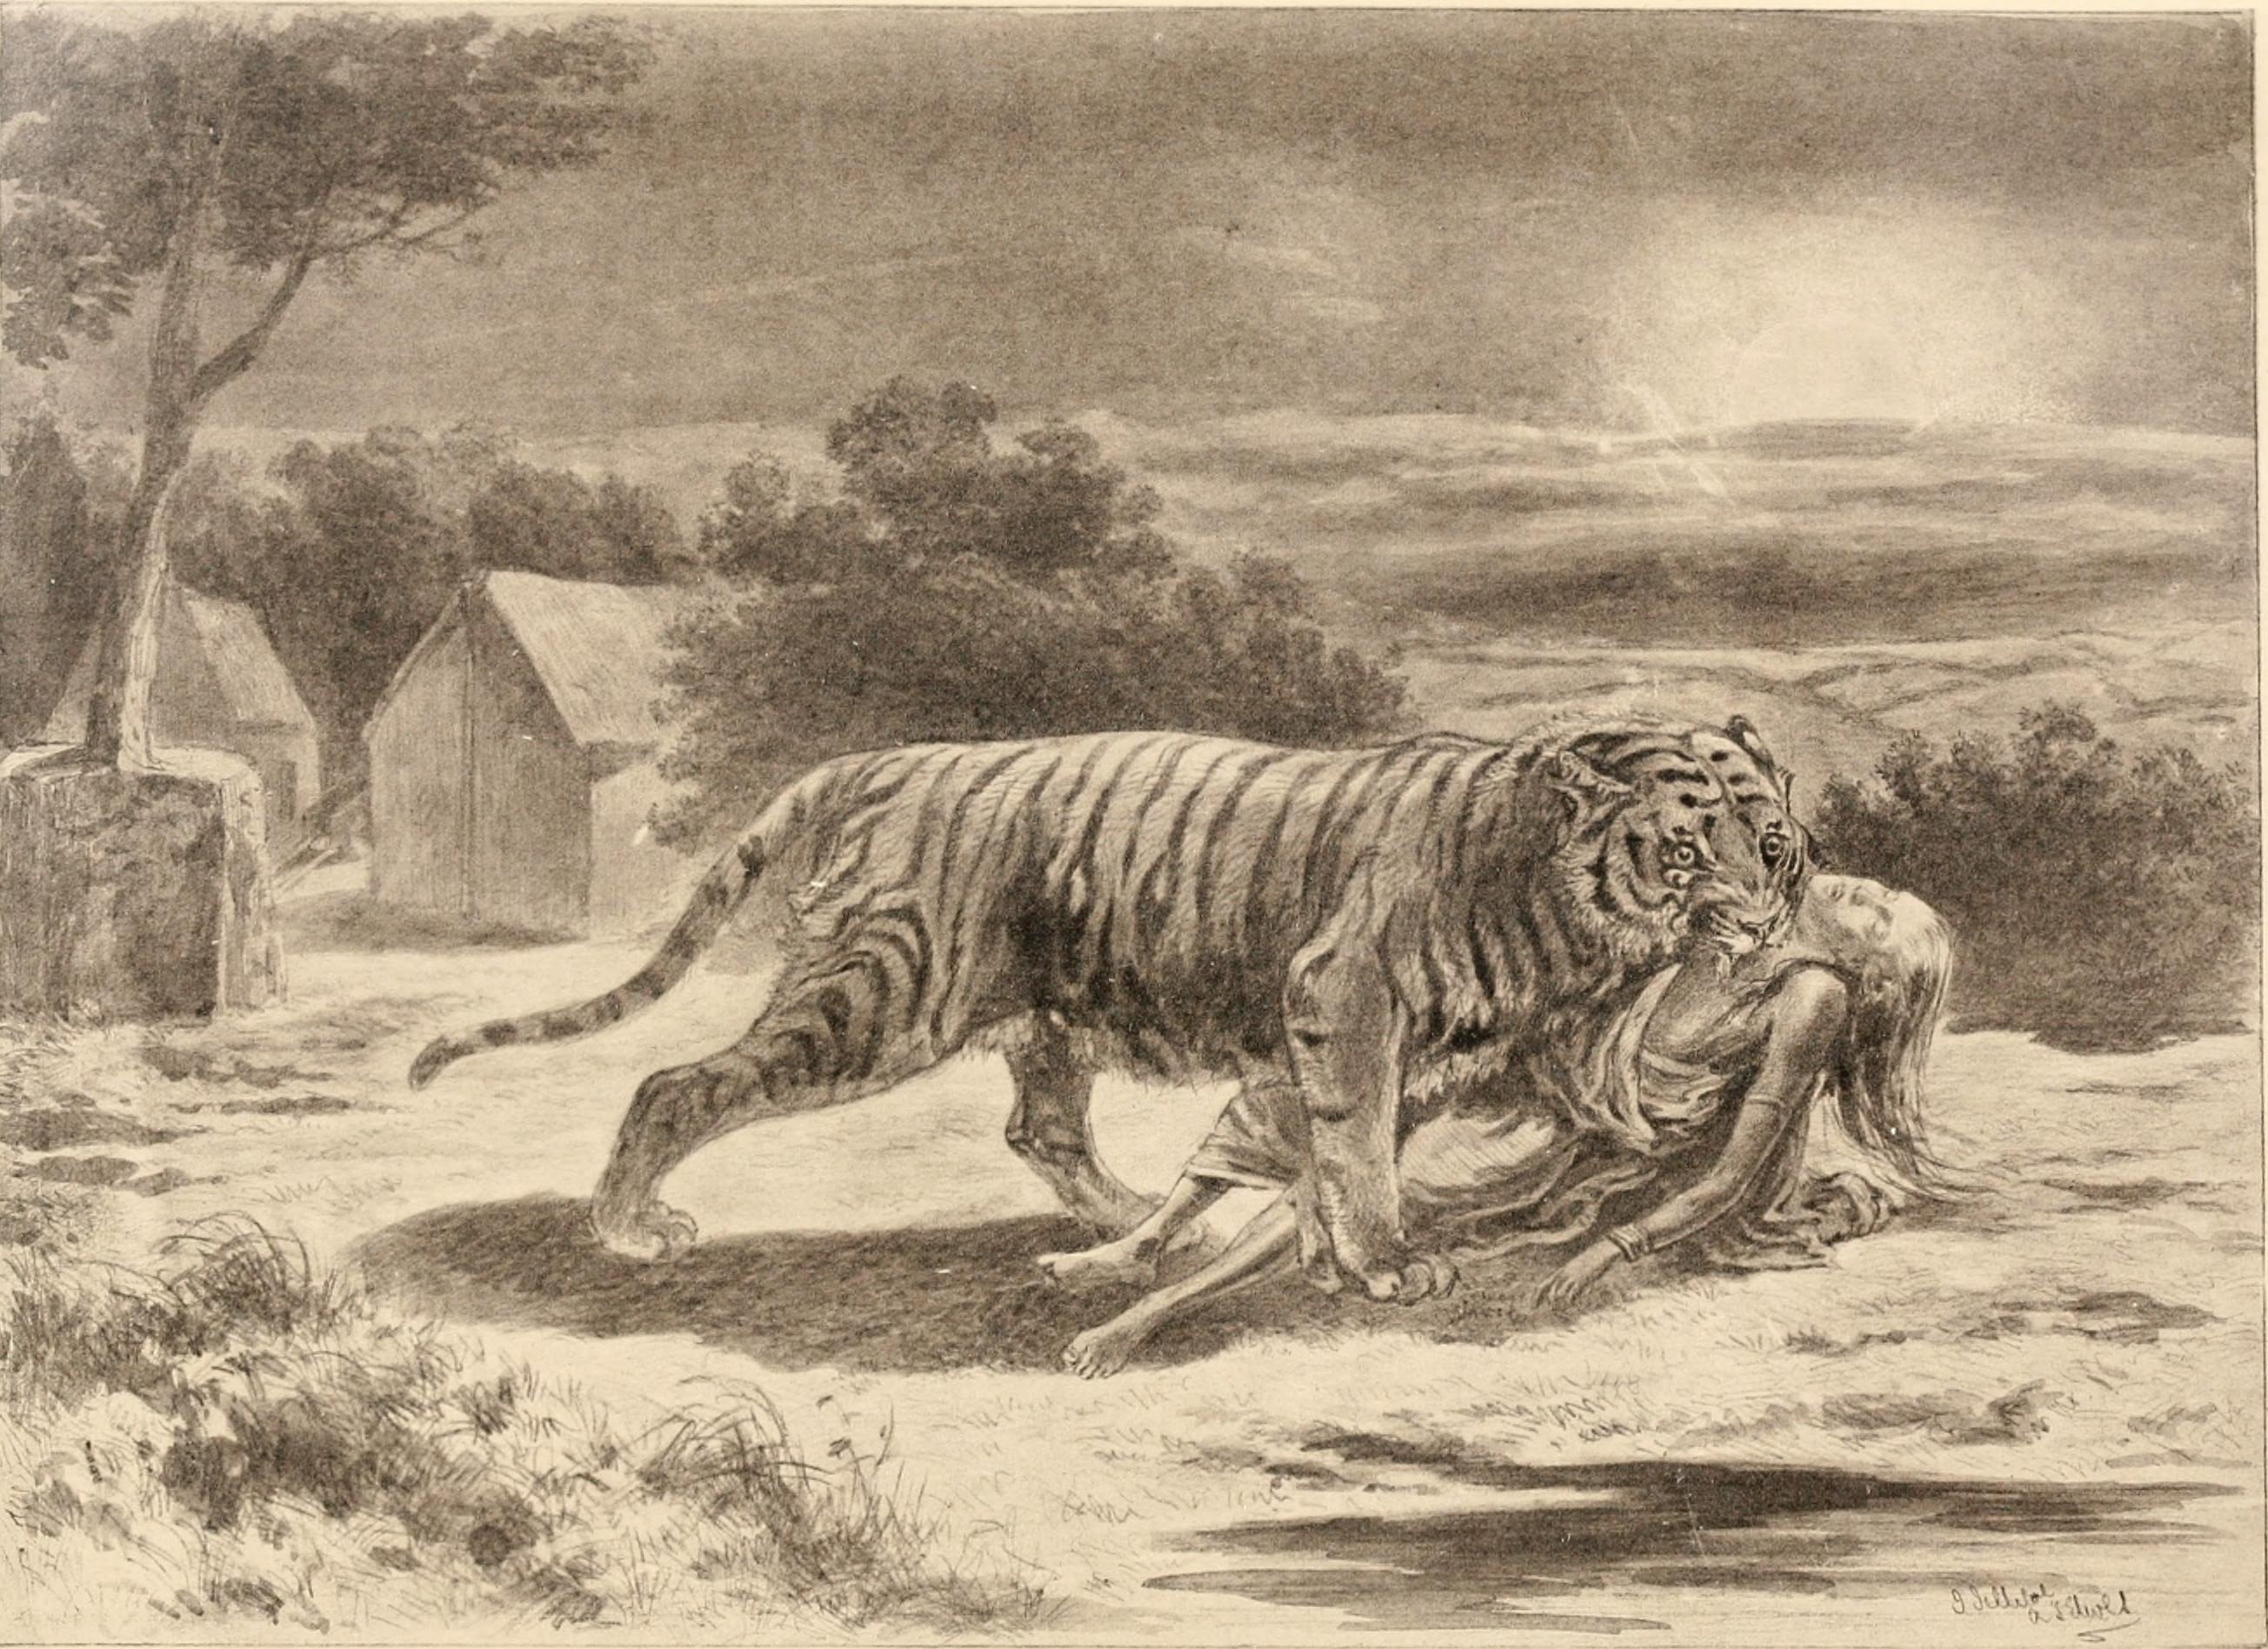 Undated vintage artwork of the Champawat tiger.